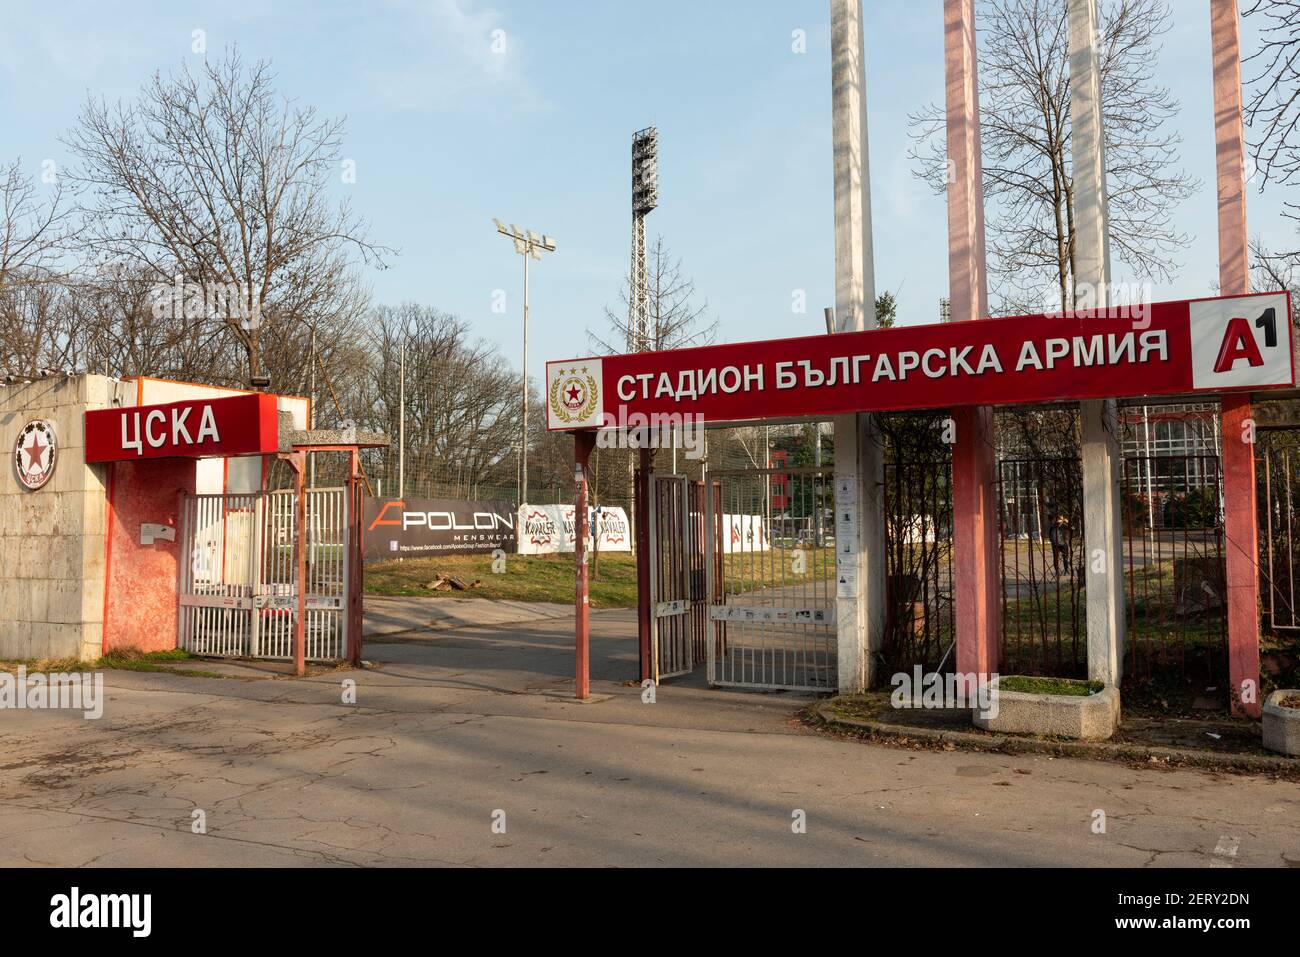 Bulgarian Army stadium and football venue of CSKA Sofia football team in the 'Borisova Gradina' in Sofia, Bulgaria, Eastern Europe Stock Photo